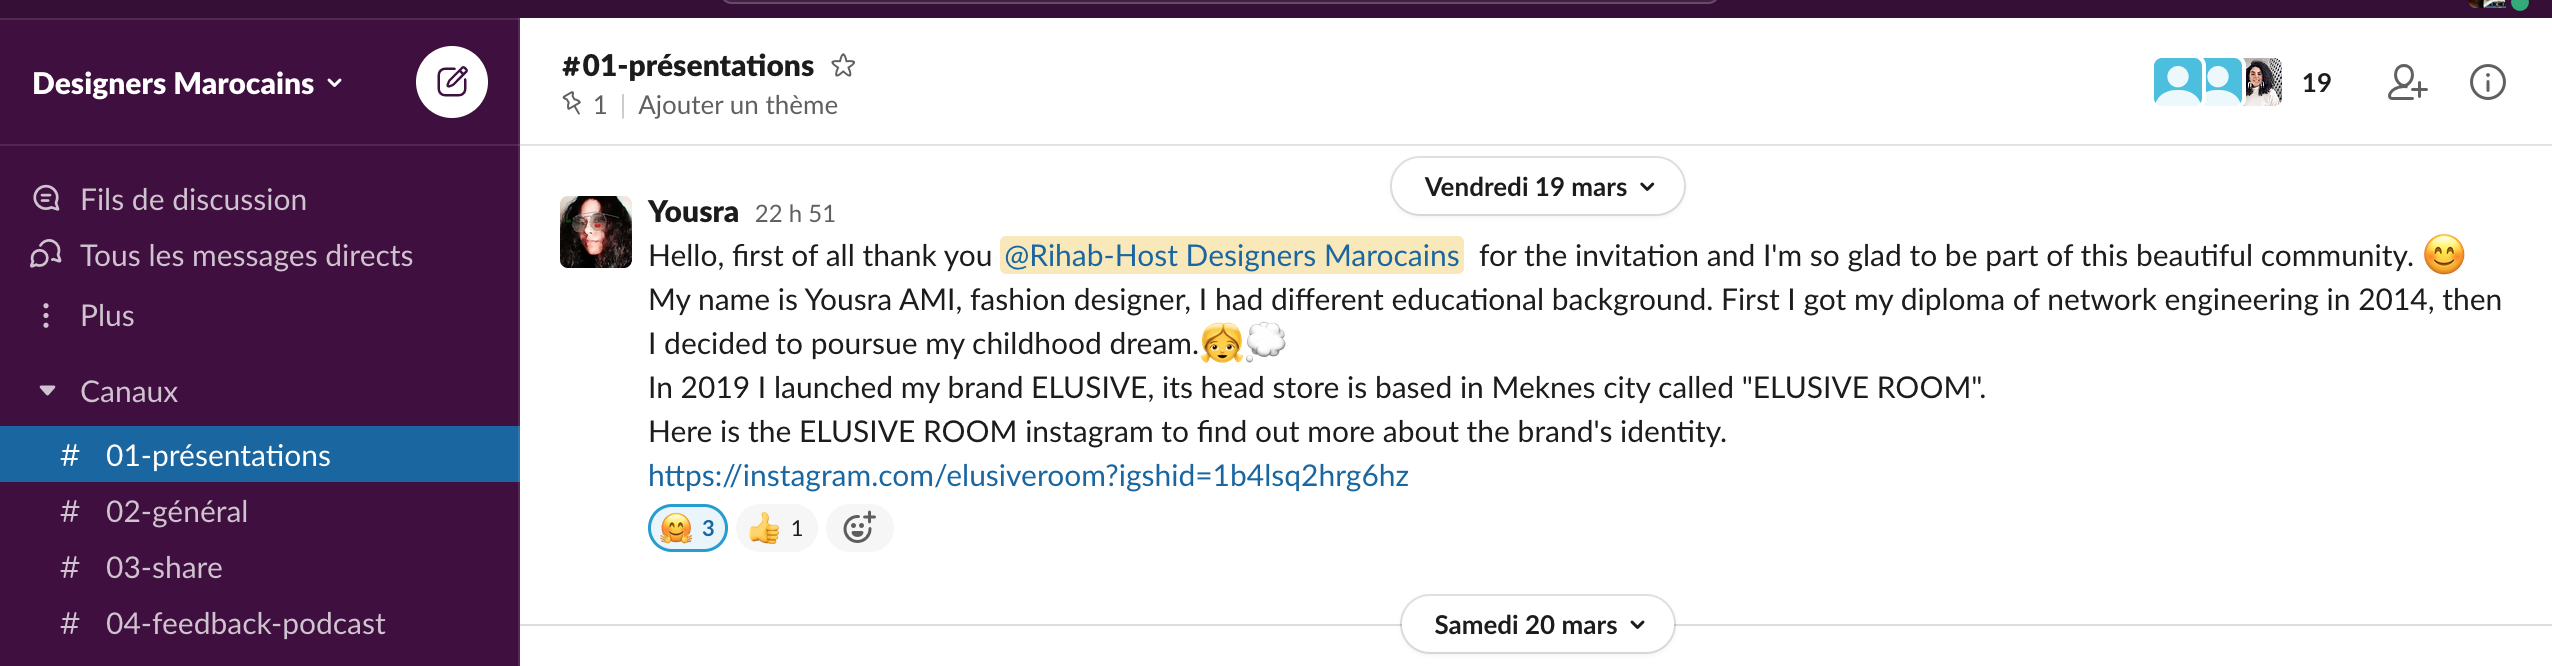 Slack Designers Marocains